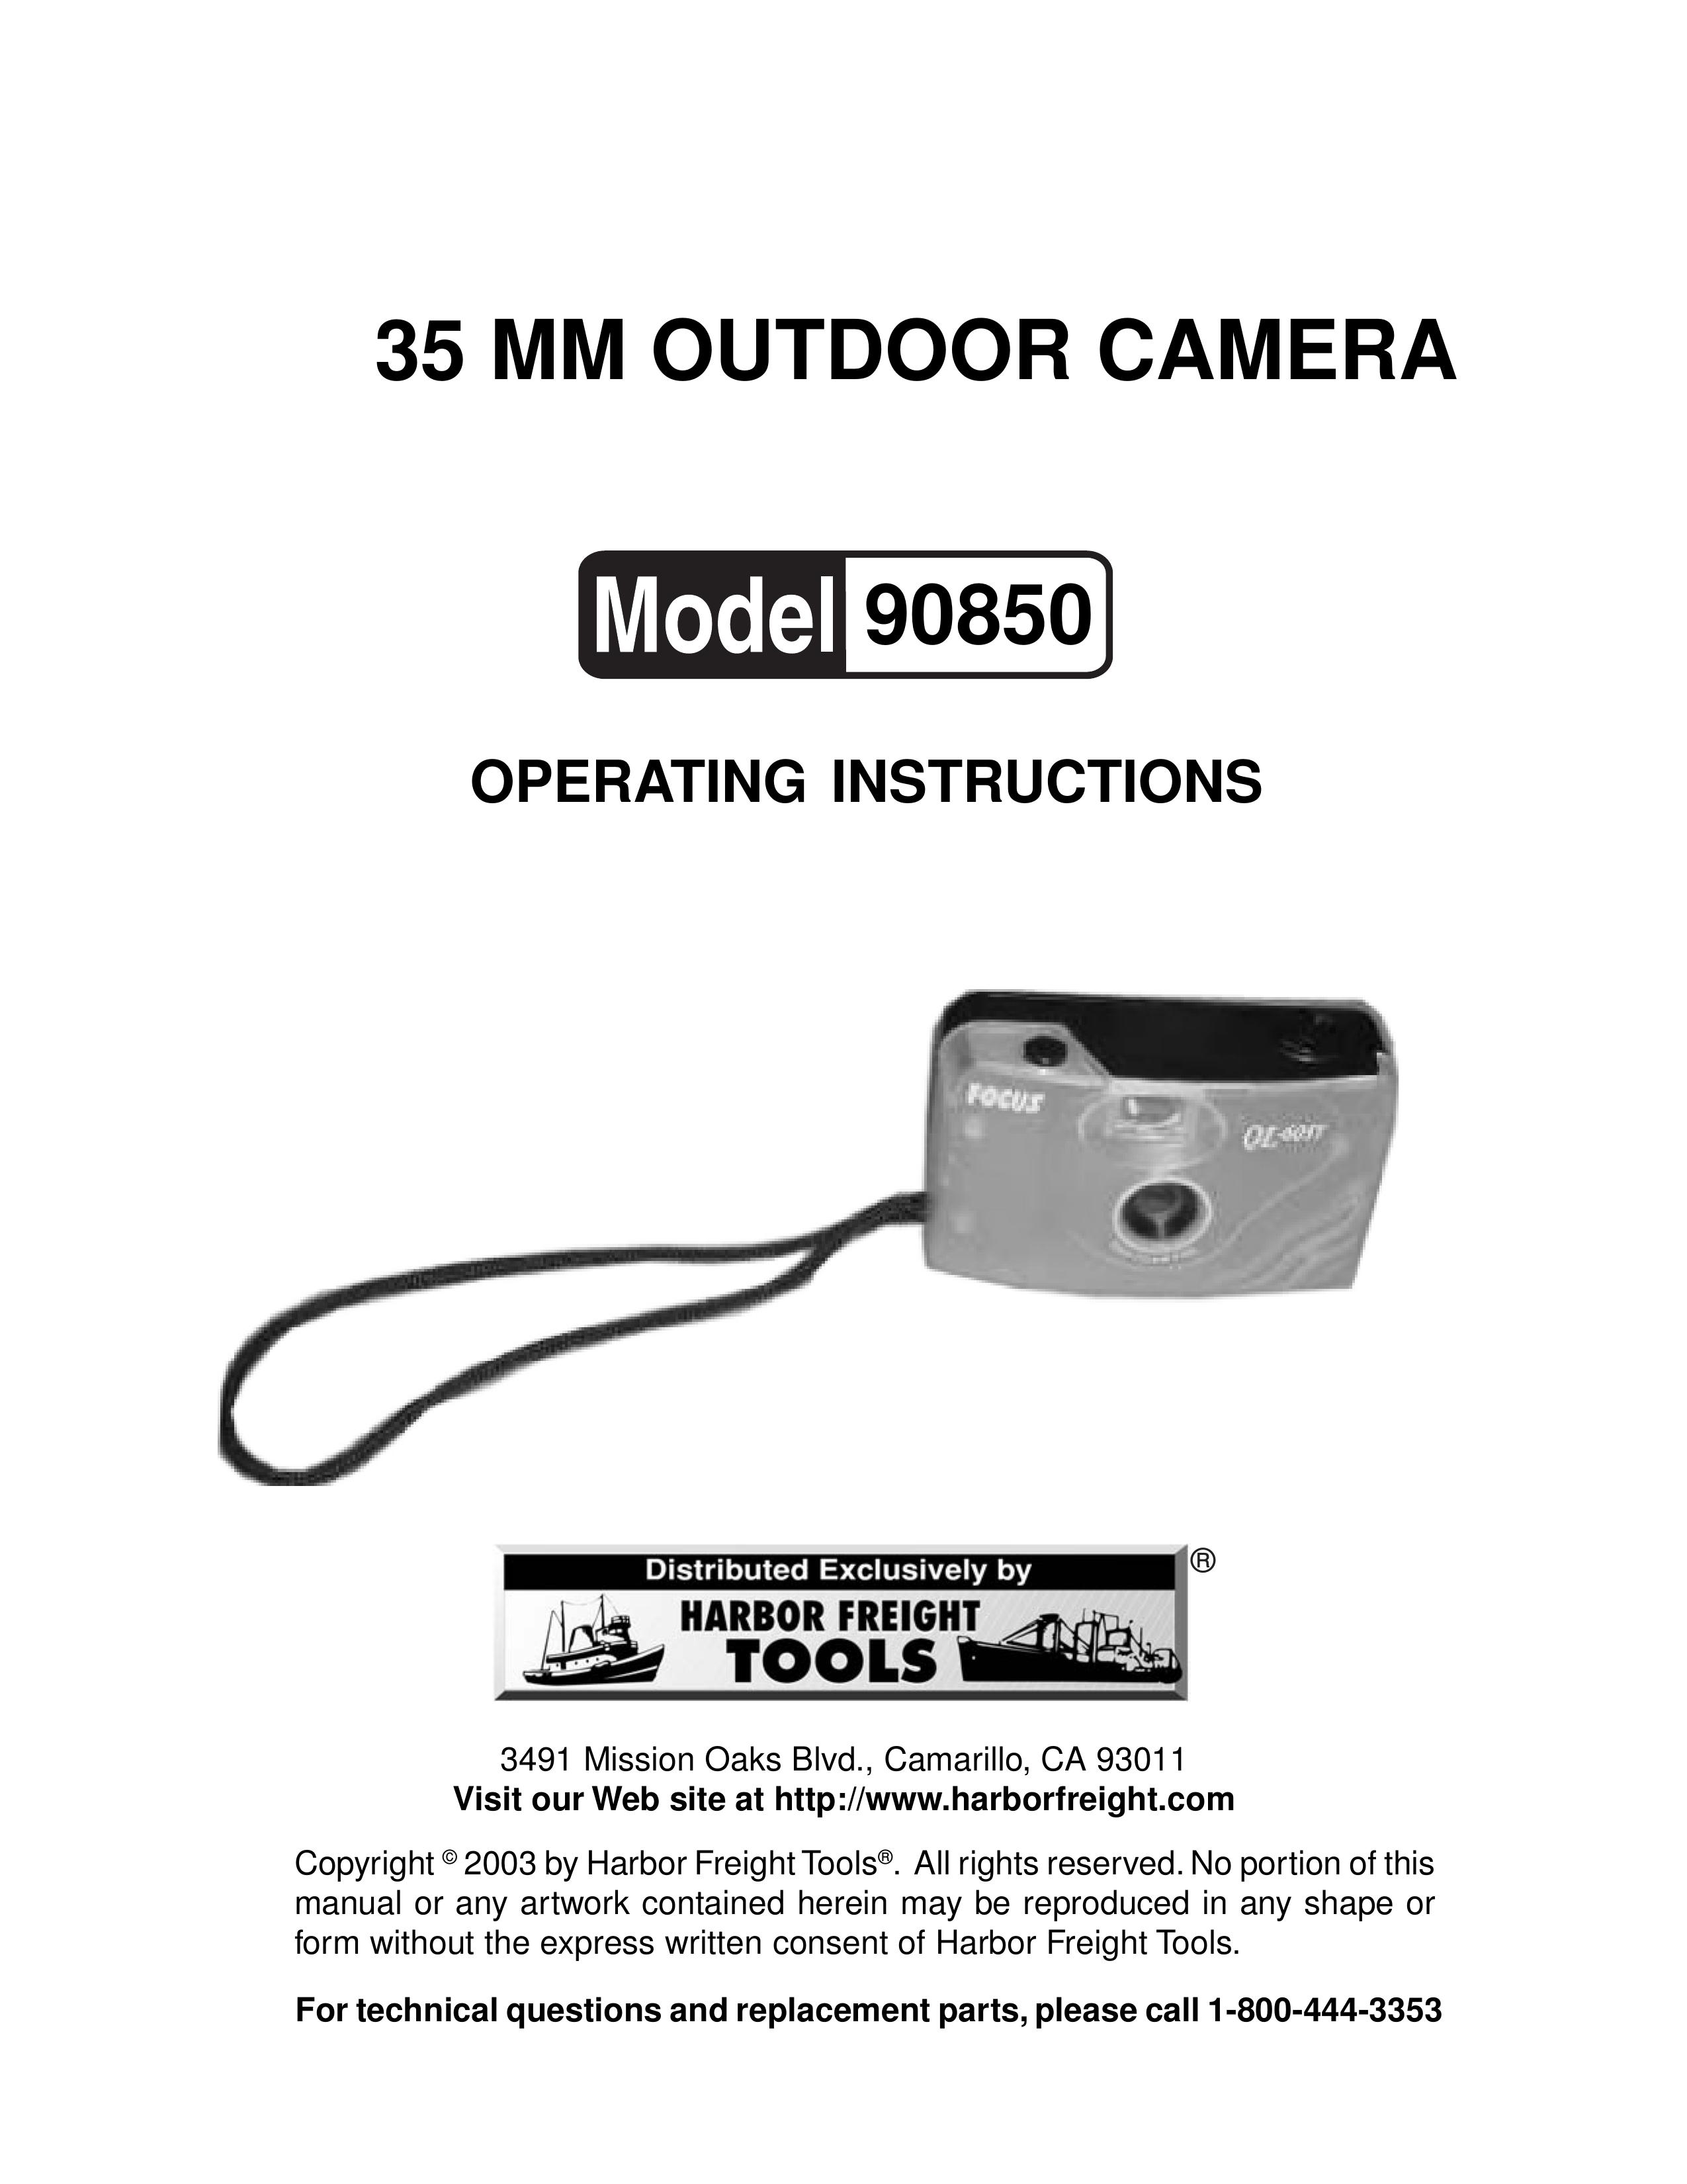 Harbor Freight Tools 90850 Film Camera User Manual